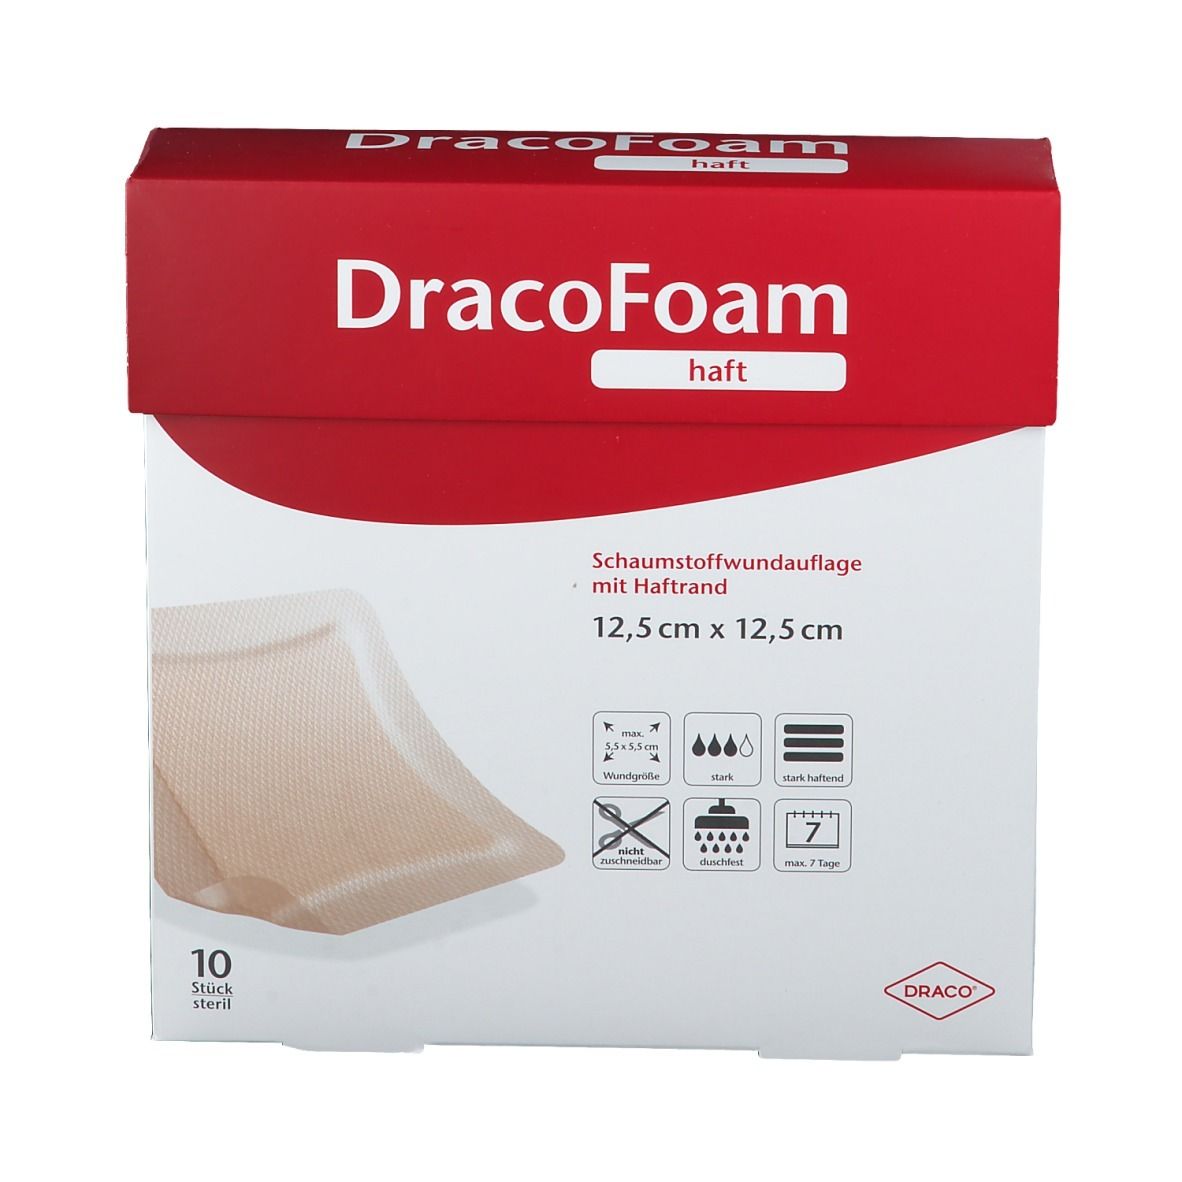 DracoFoam haft steril 12,5 cm x 12,5 cm